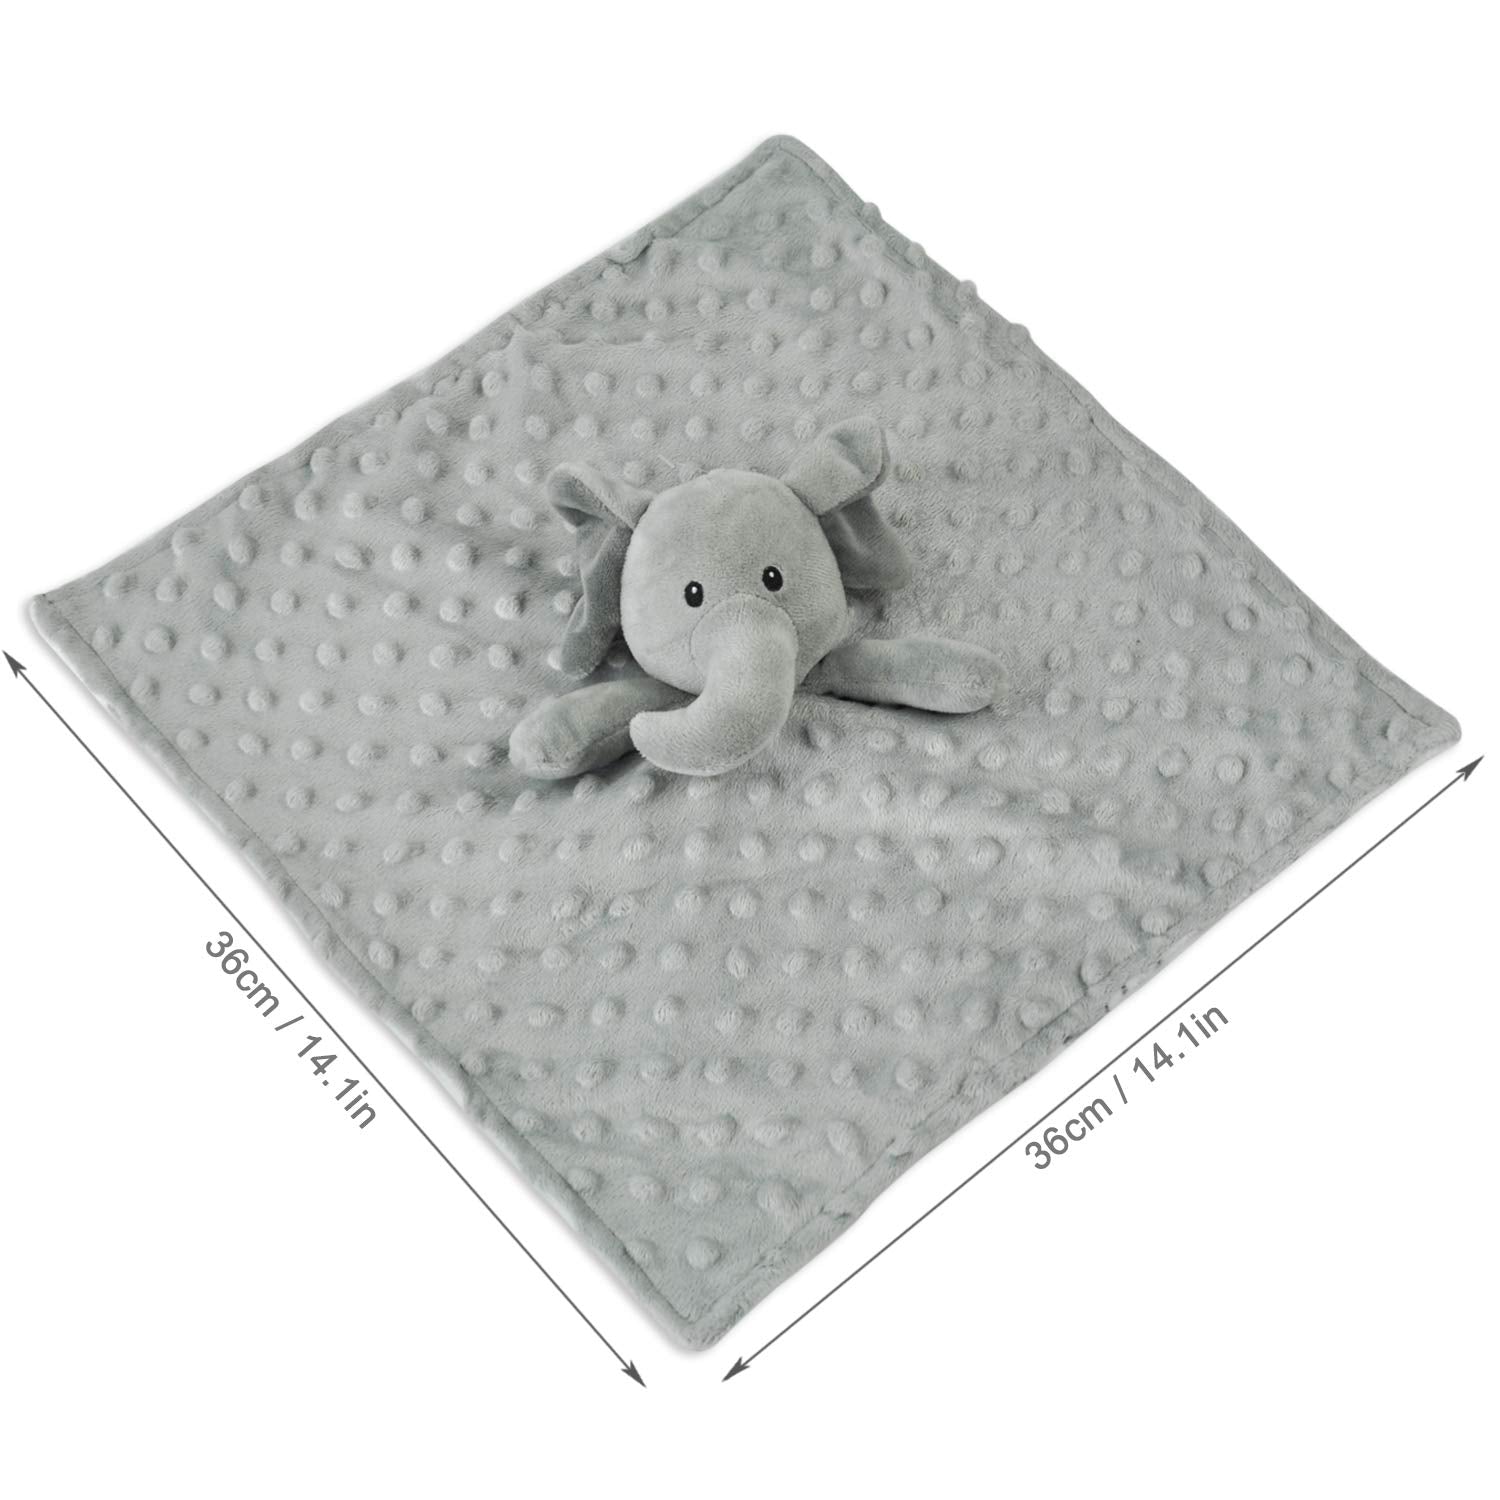 Honest Baby Organic Cotton Elephant Lovey Rattle Grey Blue Stars